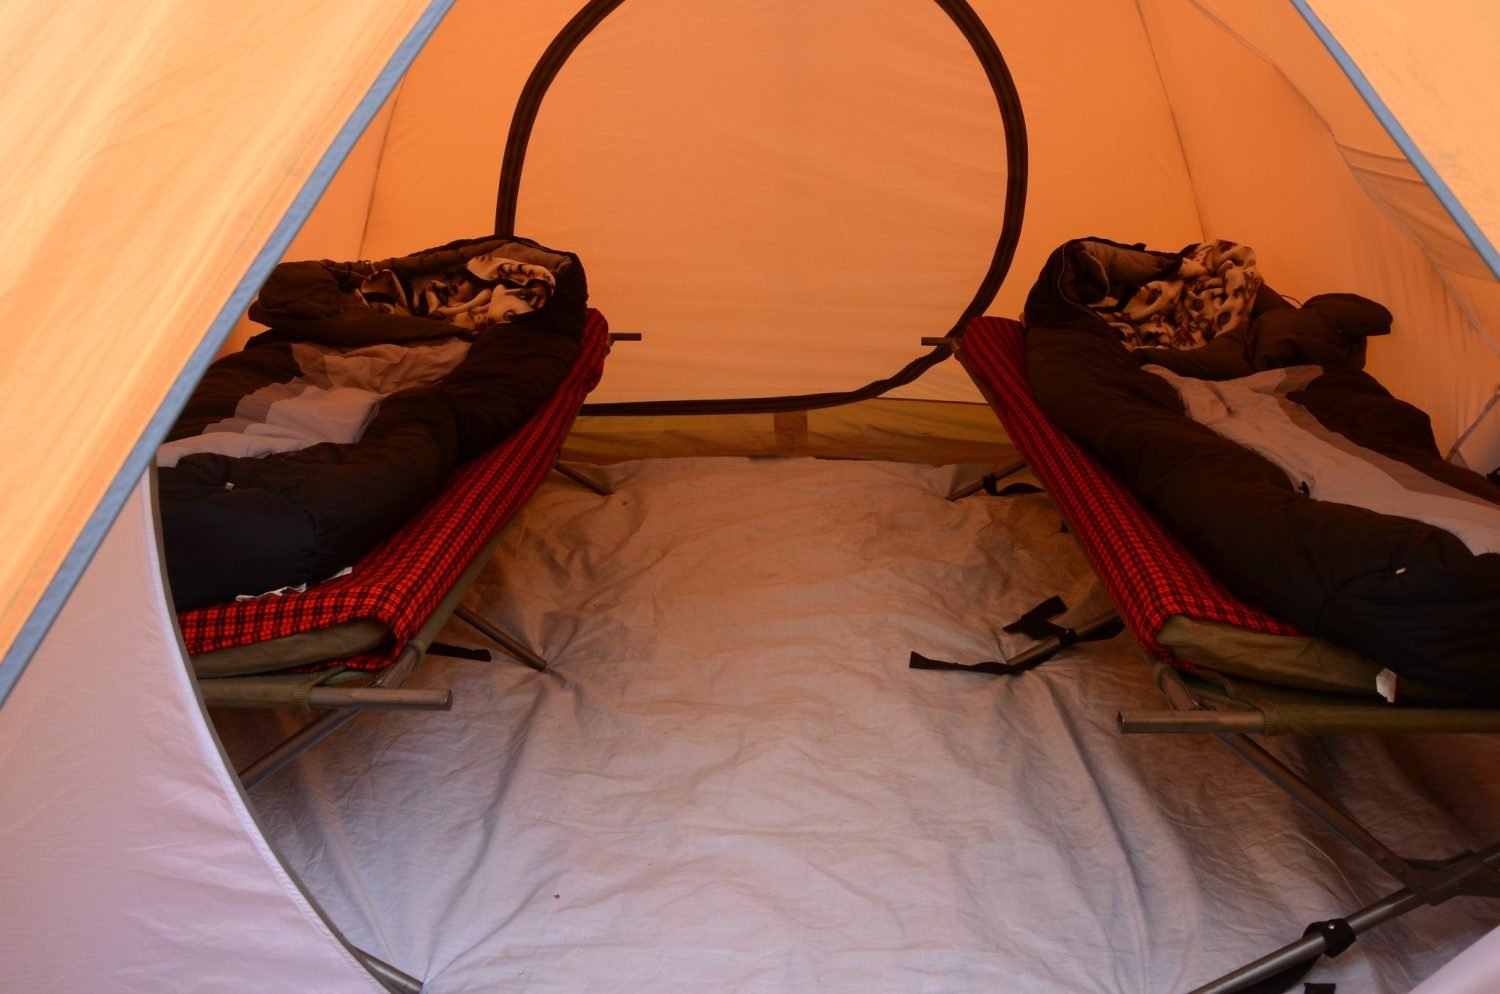 VIP Spec Tents, Climbing Kilimanjaro, Adventure International0.jpg